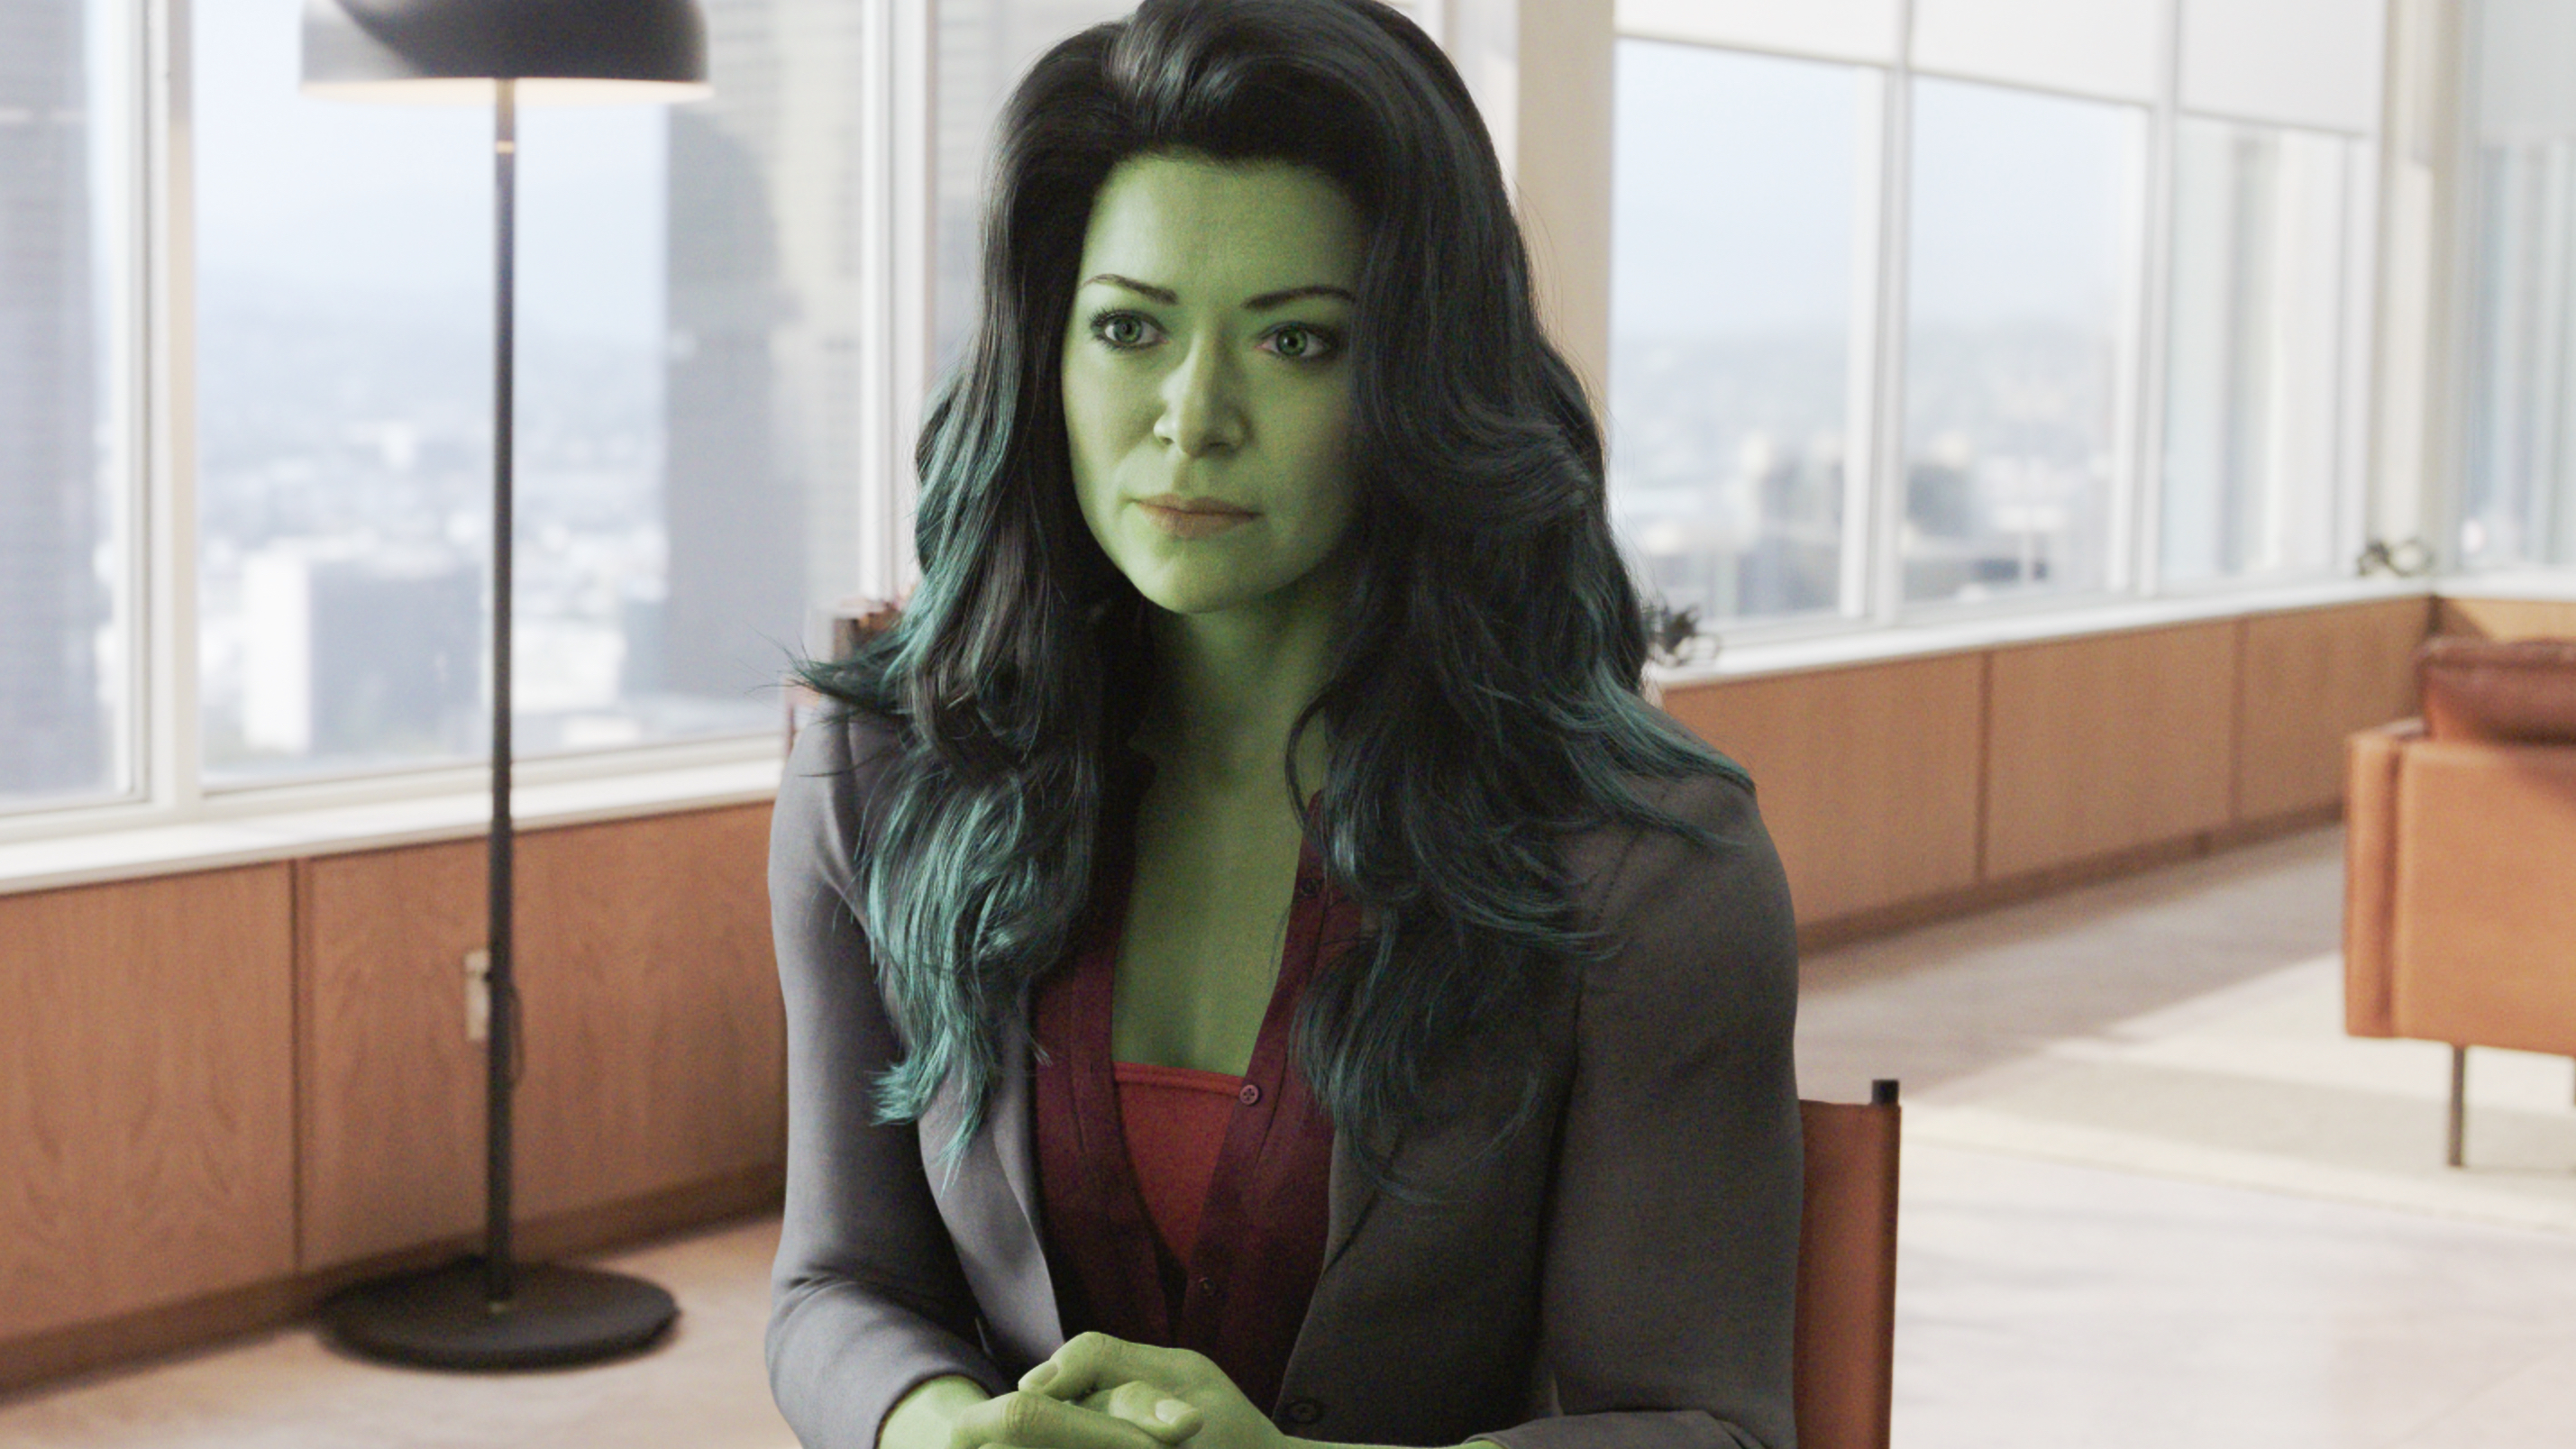 She-Hulk: Attorney at Law Season 1 Mid-Season Trailer 